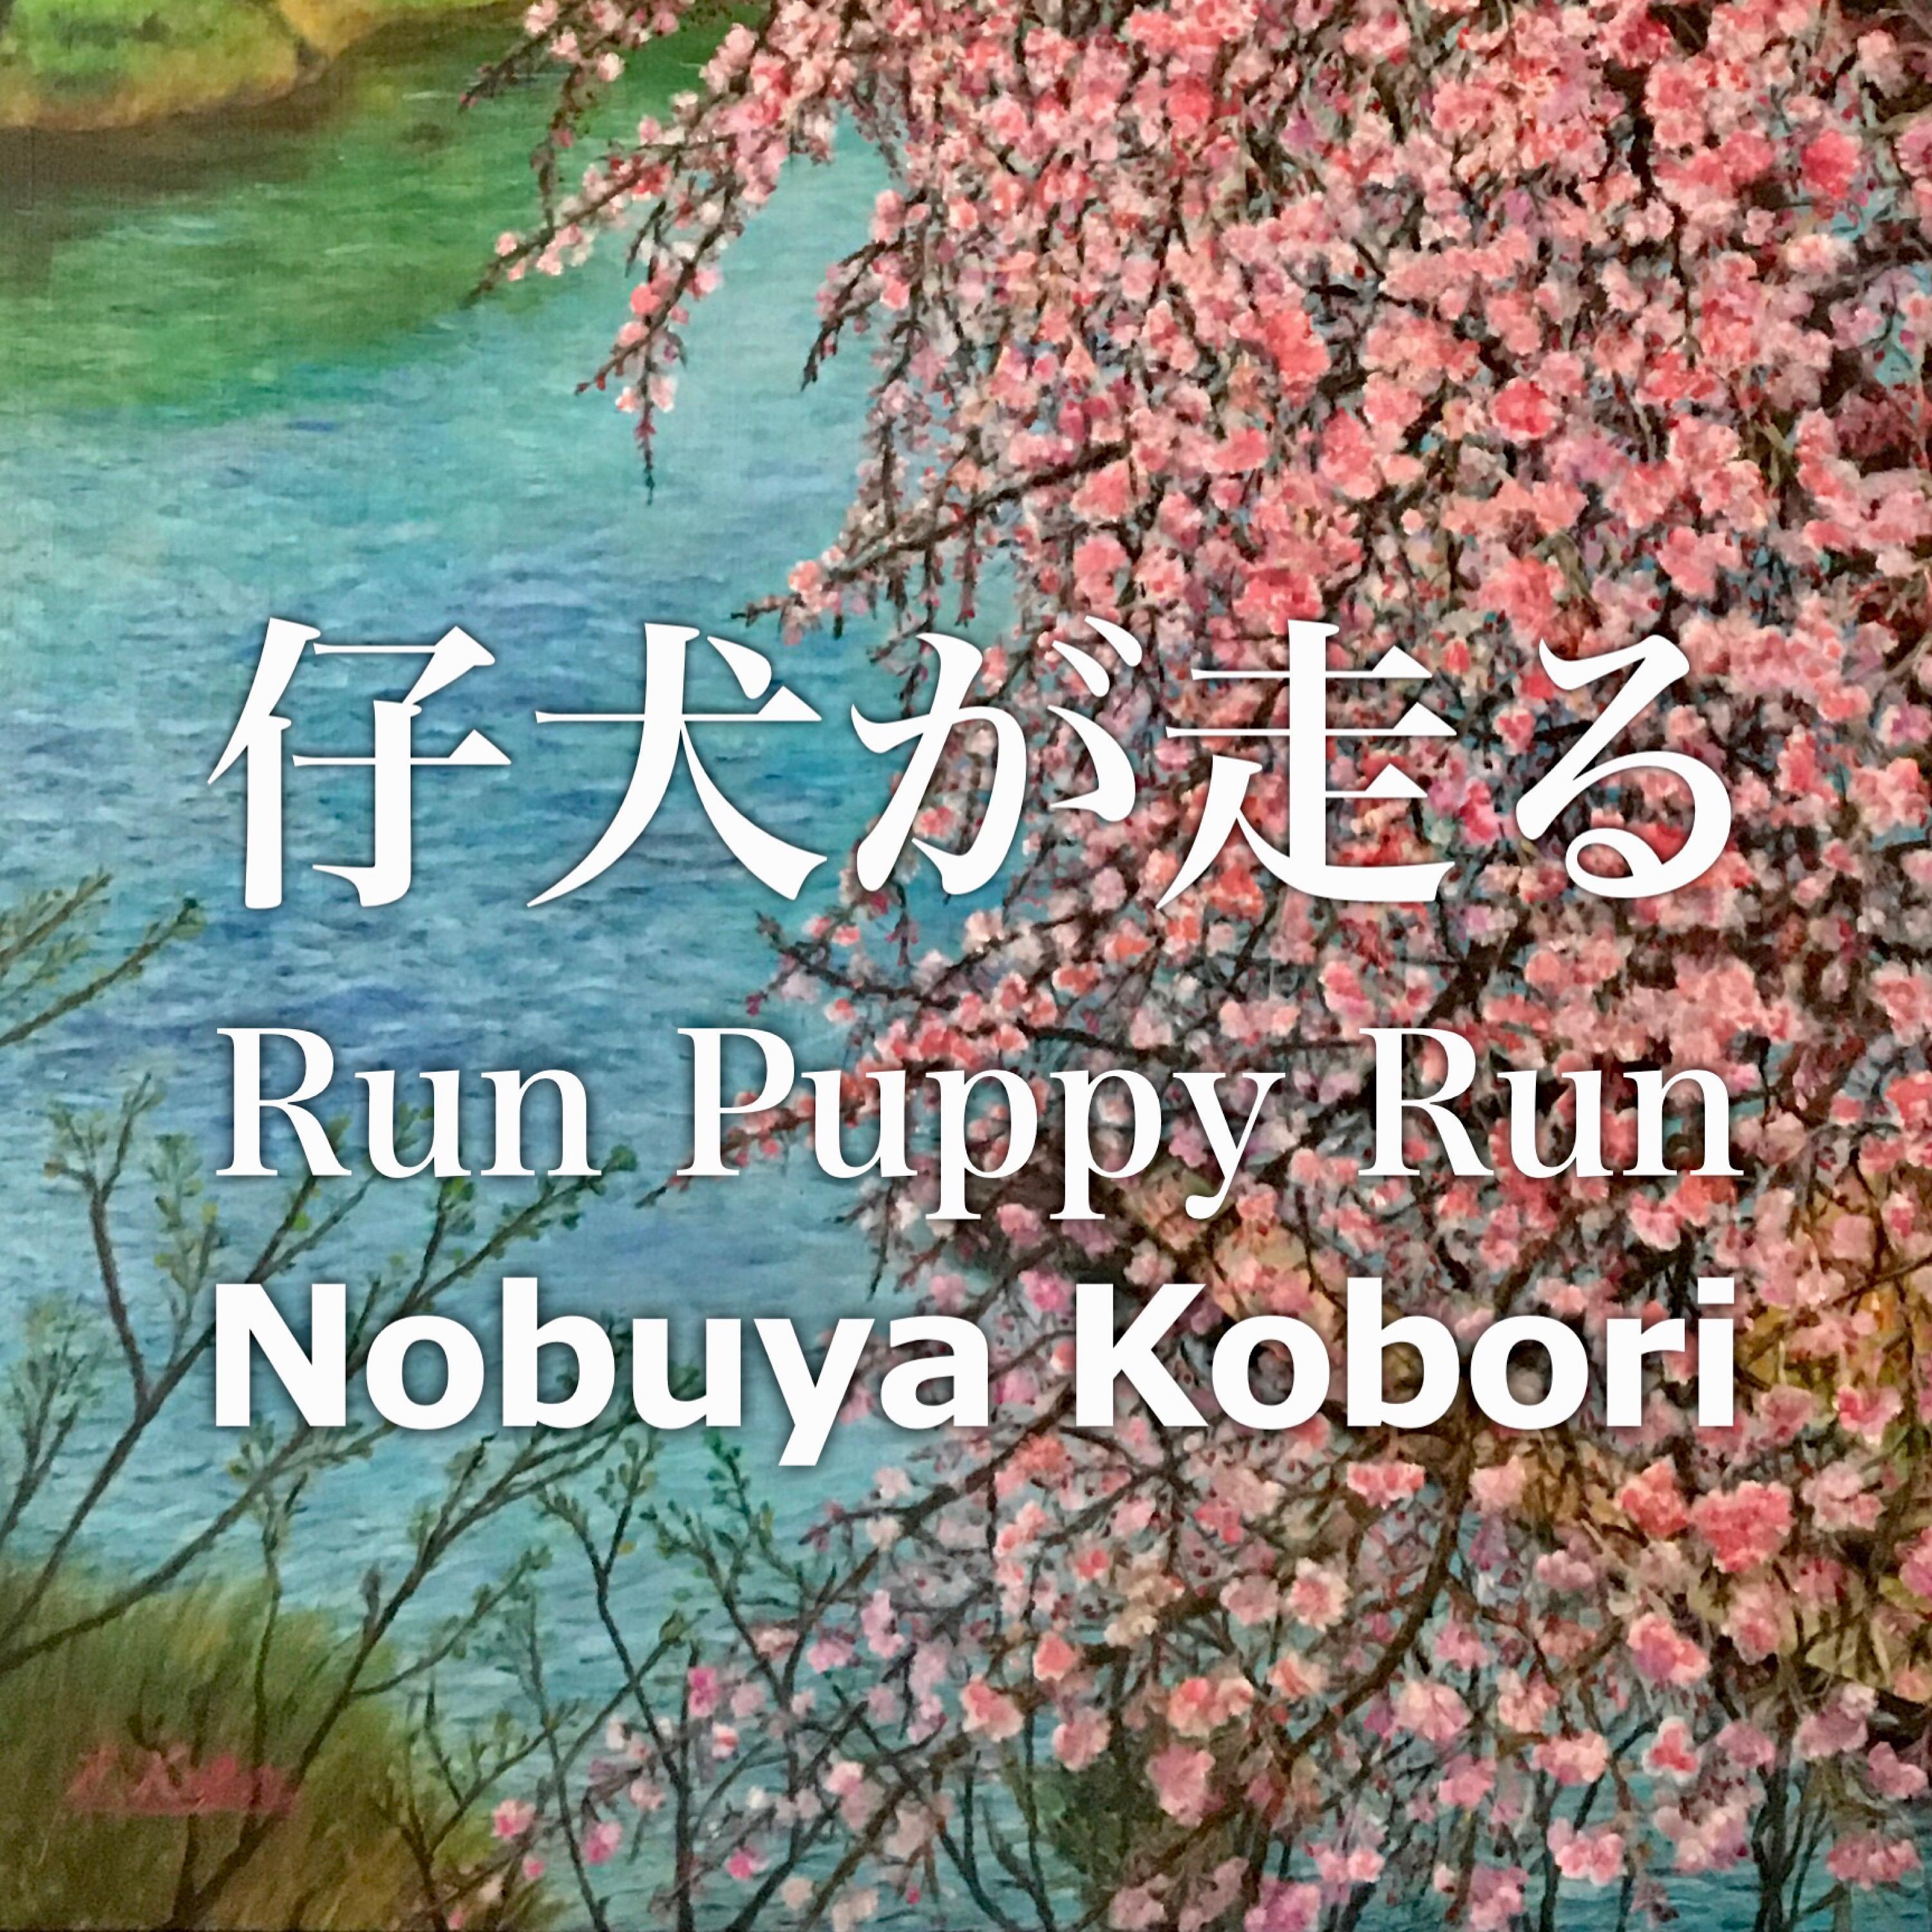 Run Puppy Run